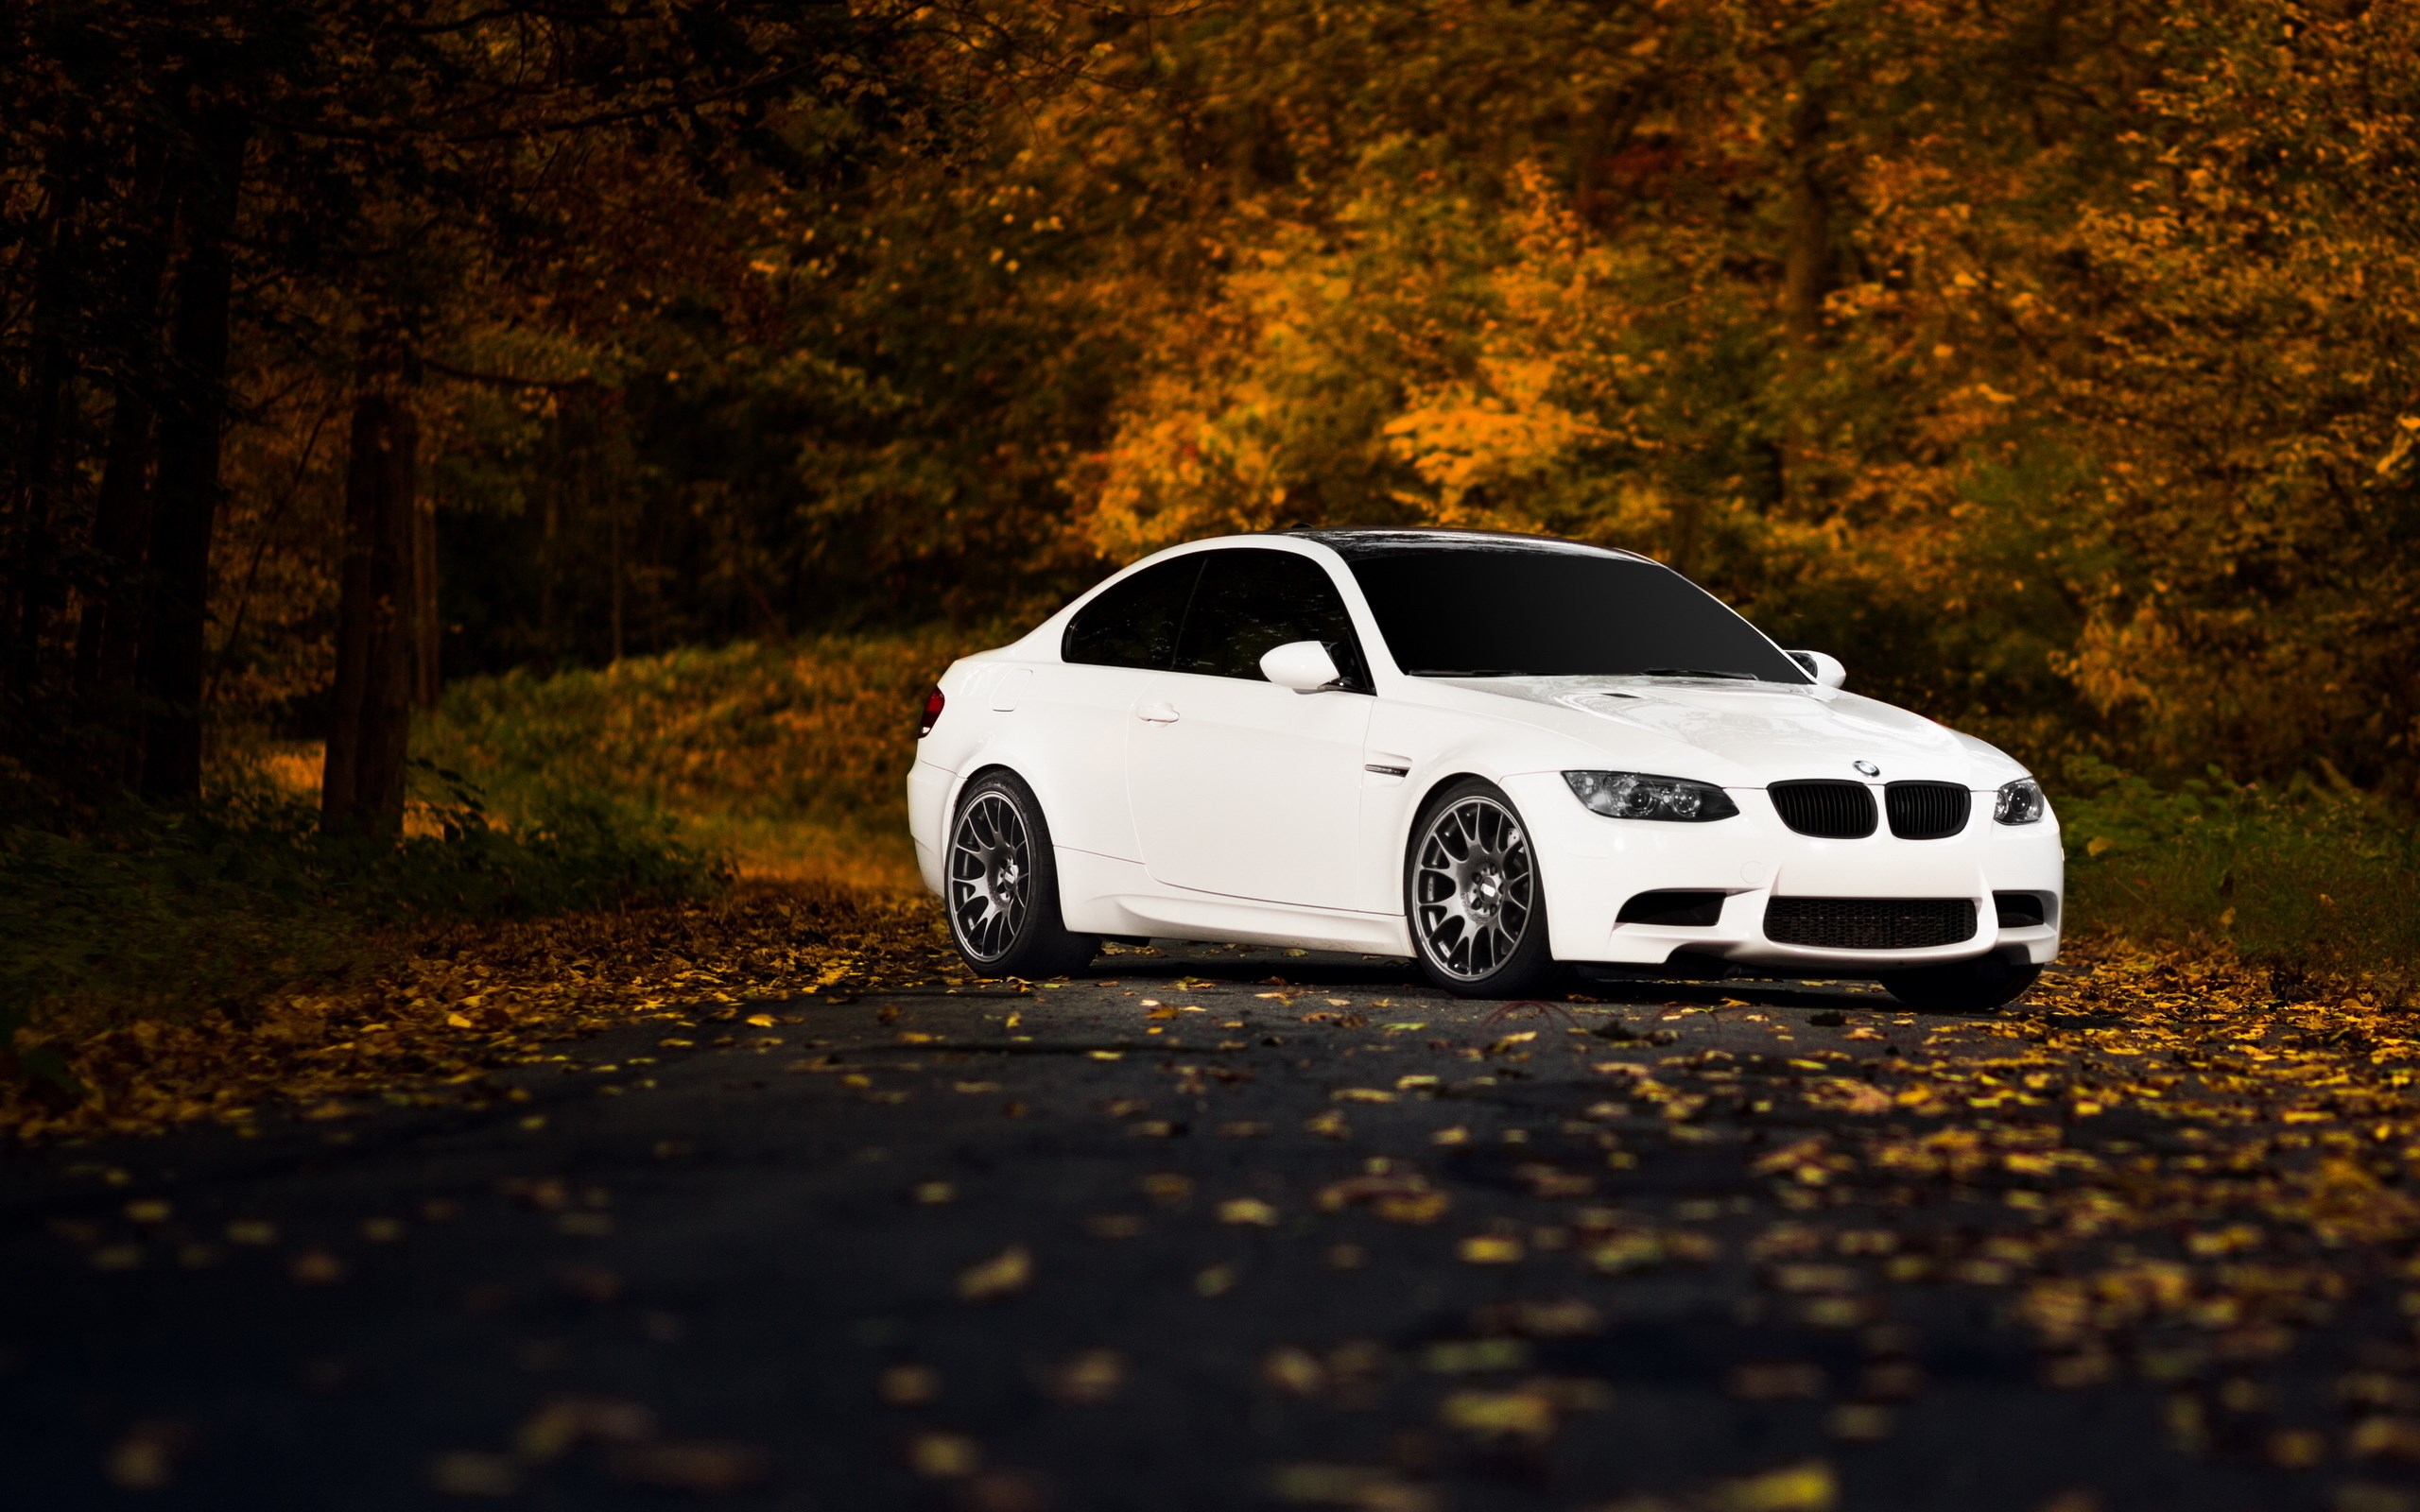 Vehicles BMW M3 HD Wallpaper | Background Image